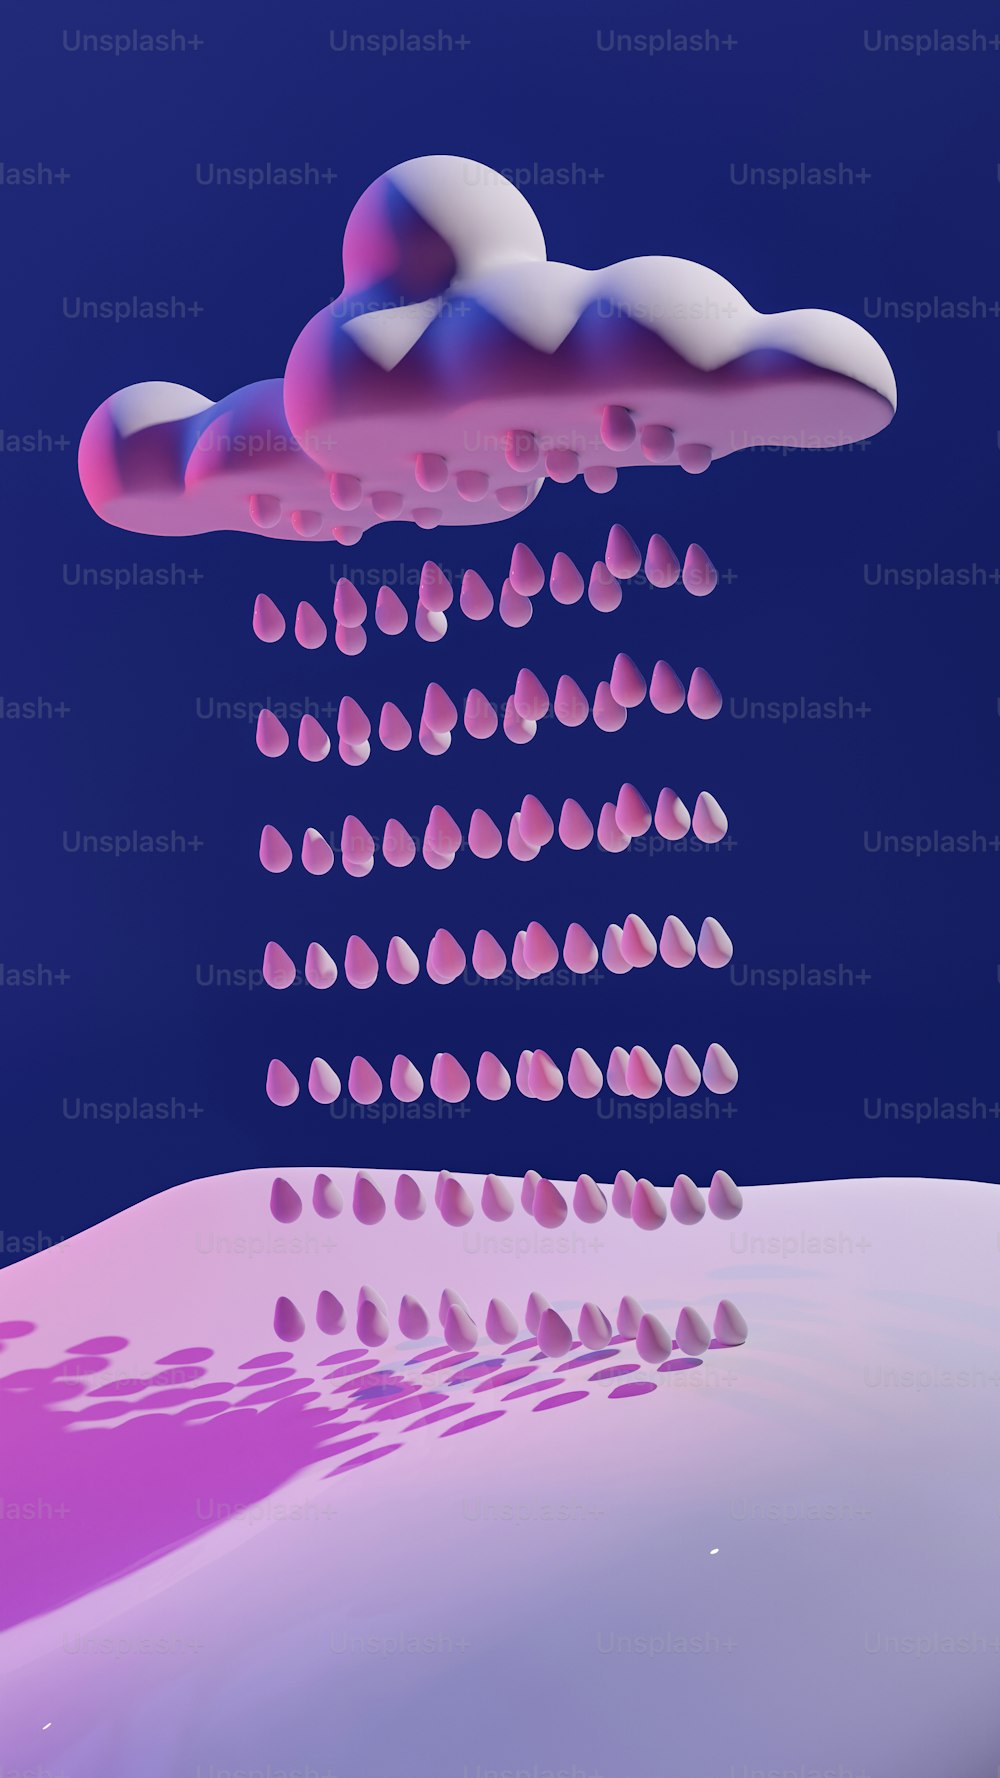 Un'immagine generata al computer di una nuvola rosa